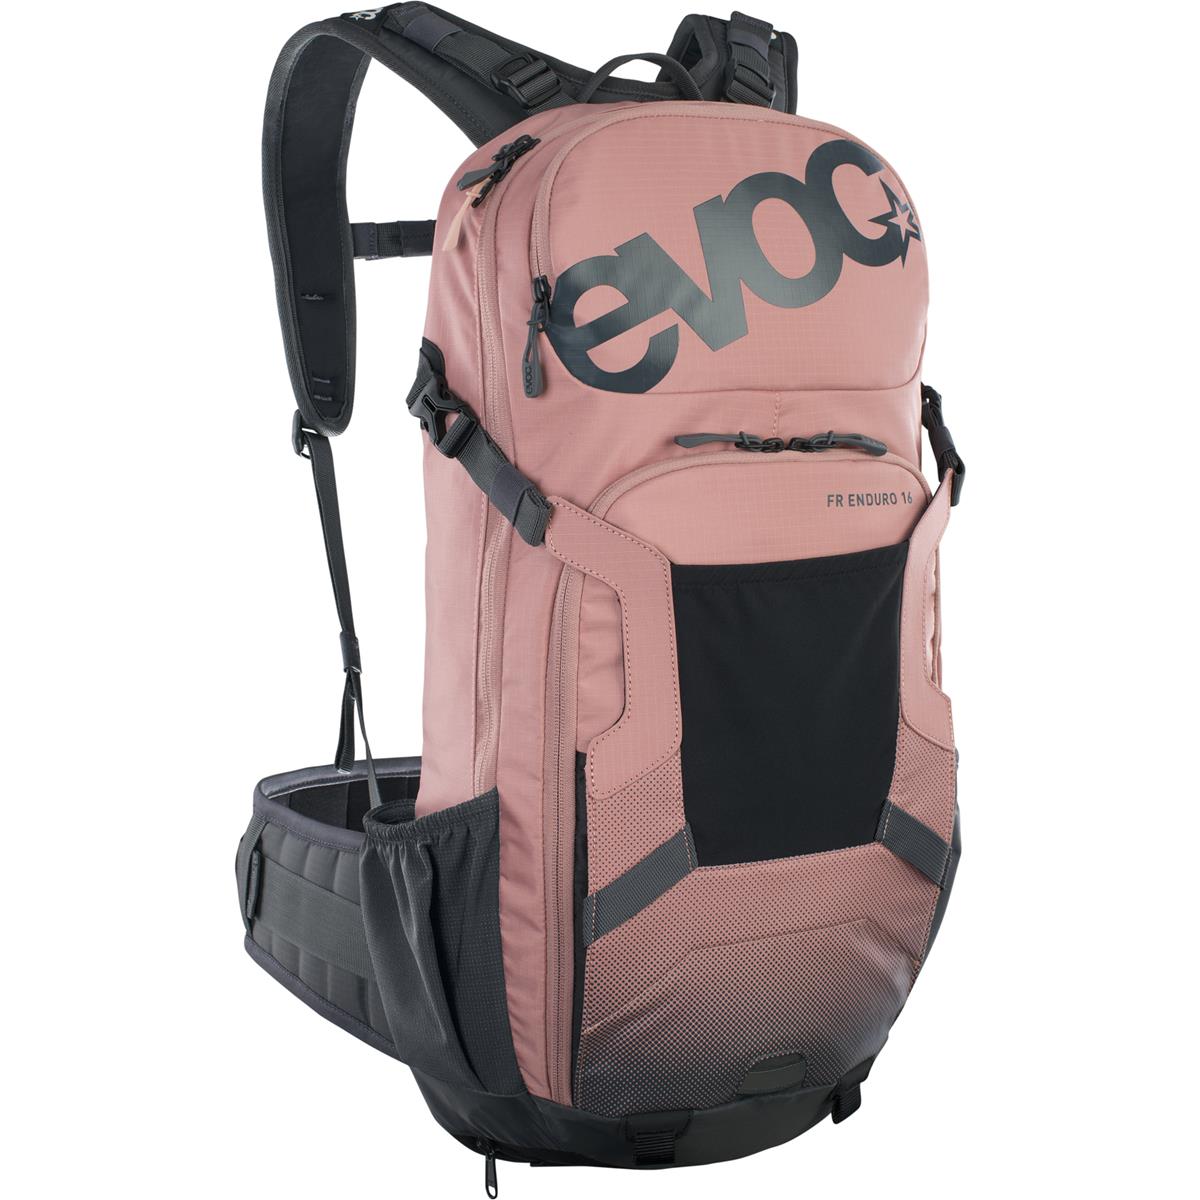 Evoc Zaino con Paraschiena FR Enduro 16 16L - Dusty Pink/Carbon Gray